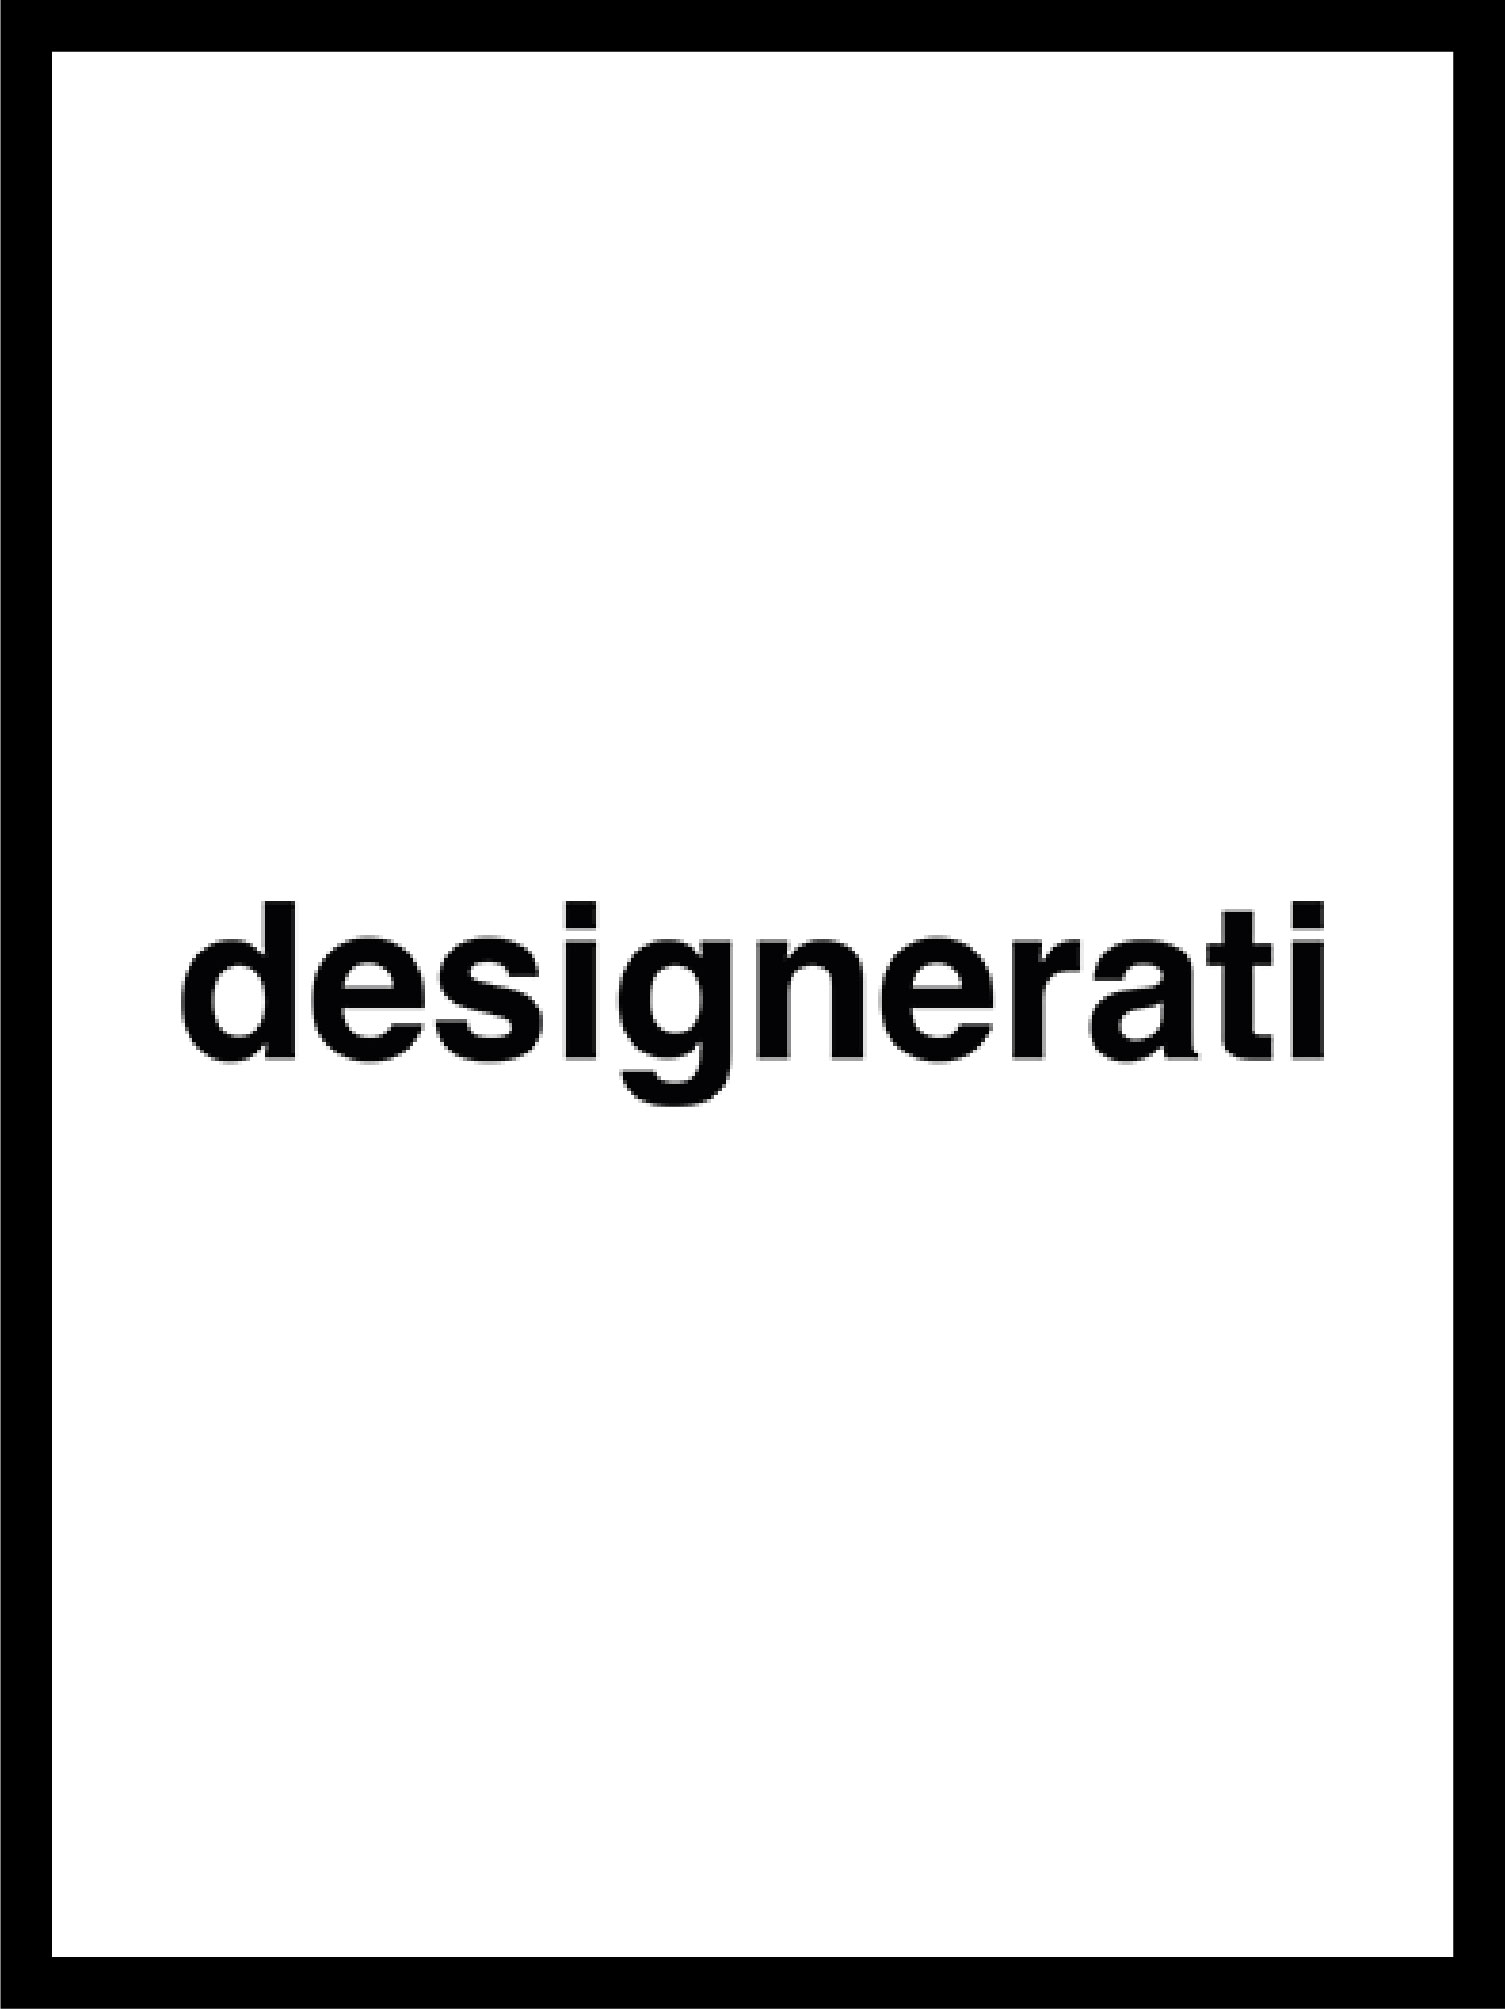 logo of the magazine Designerati